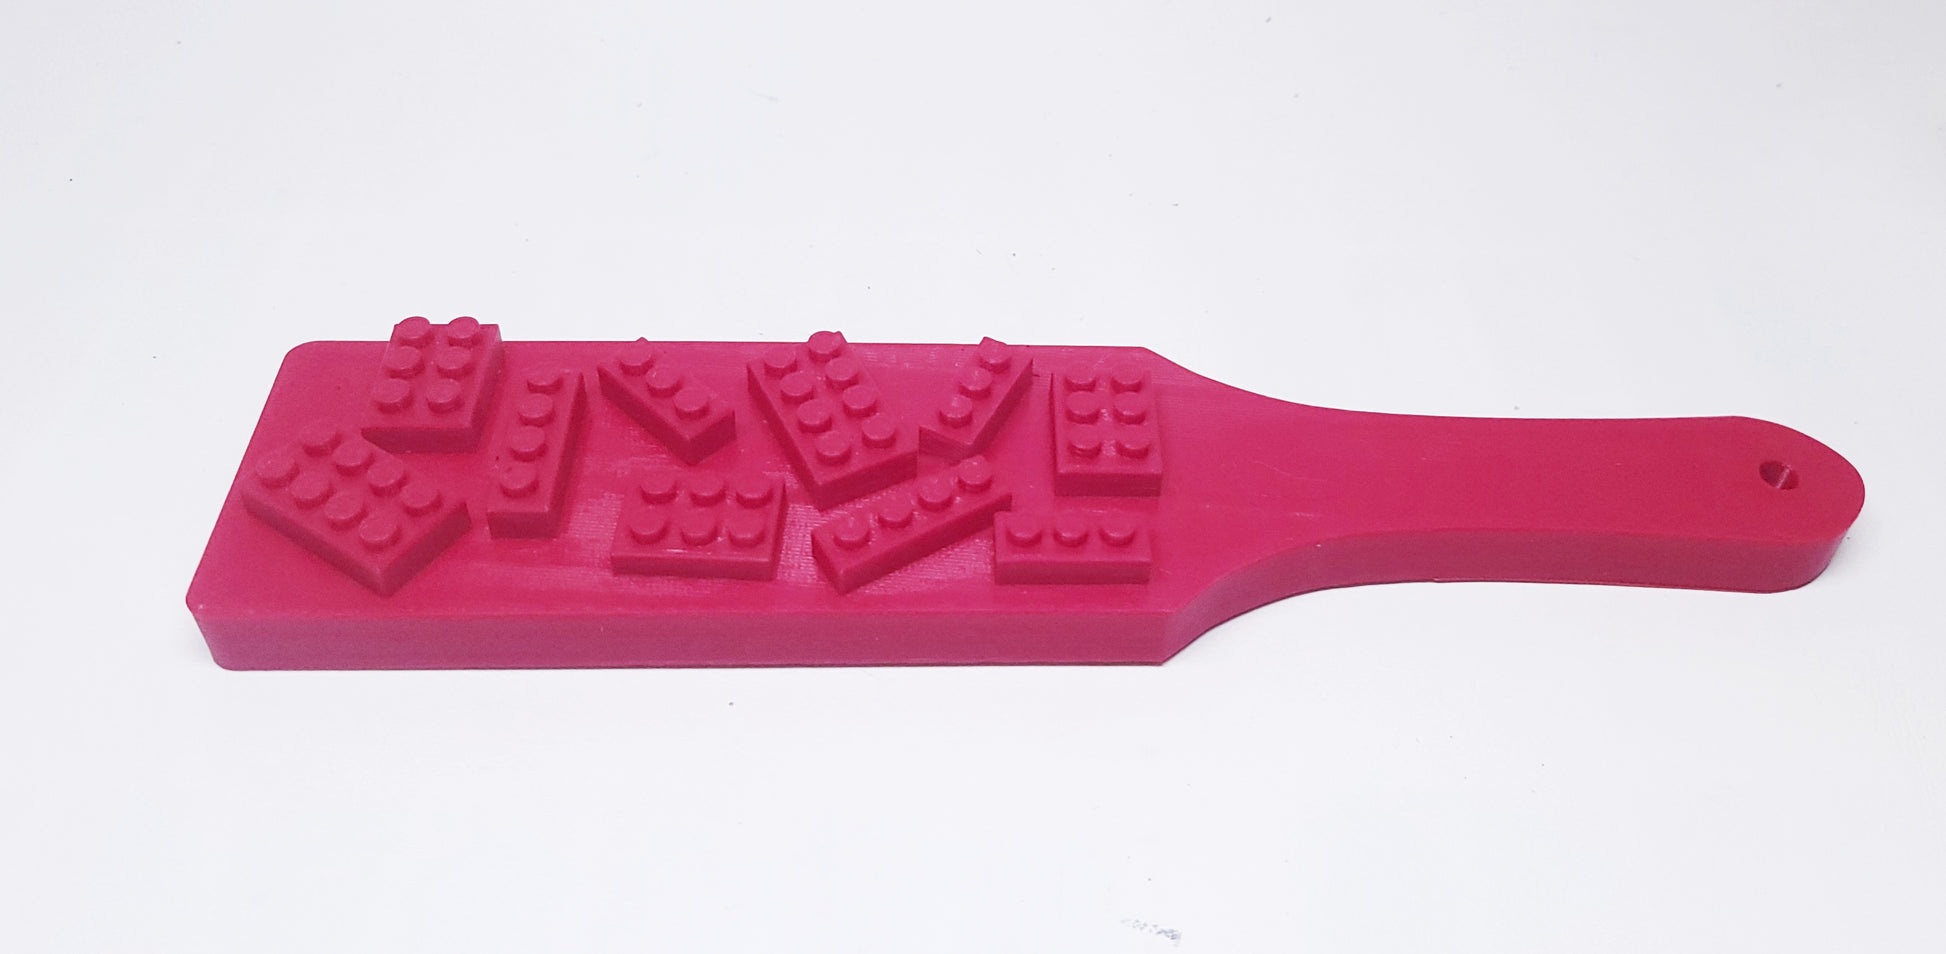 red plastic paddle with lego like bricks